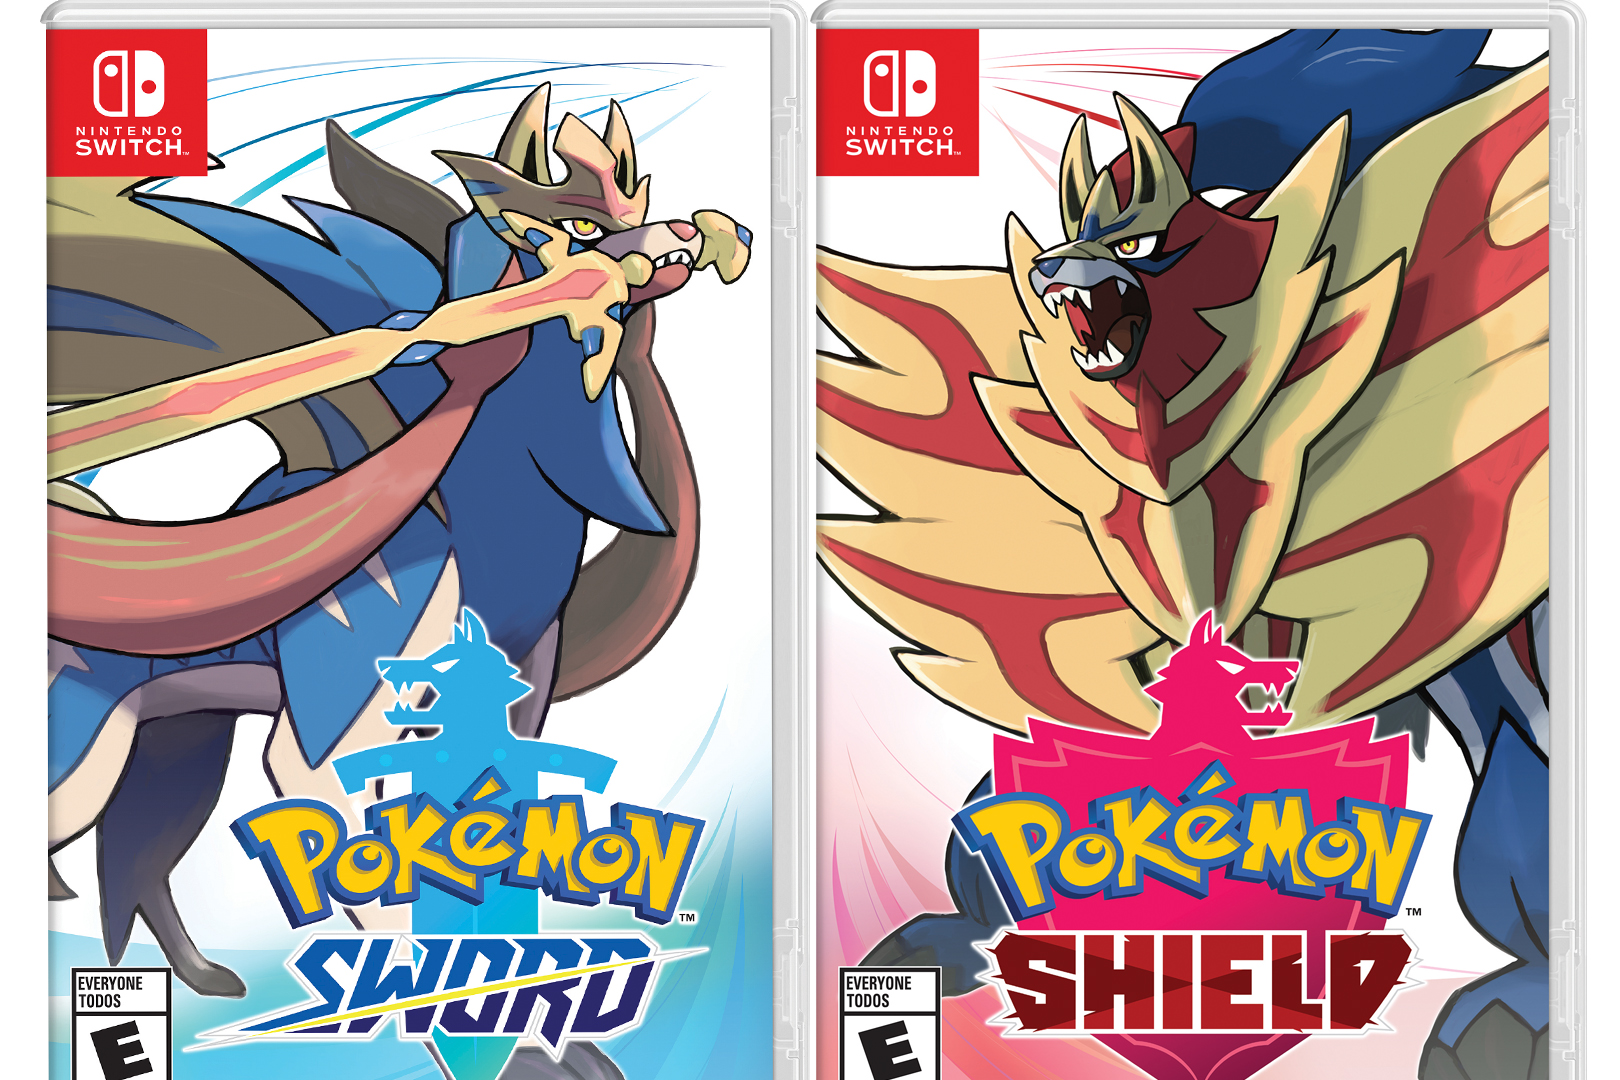 Pokémon Sword and Shield: All version exclusive Pokémon